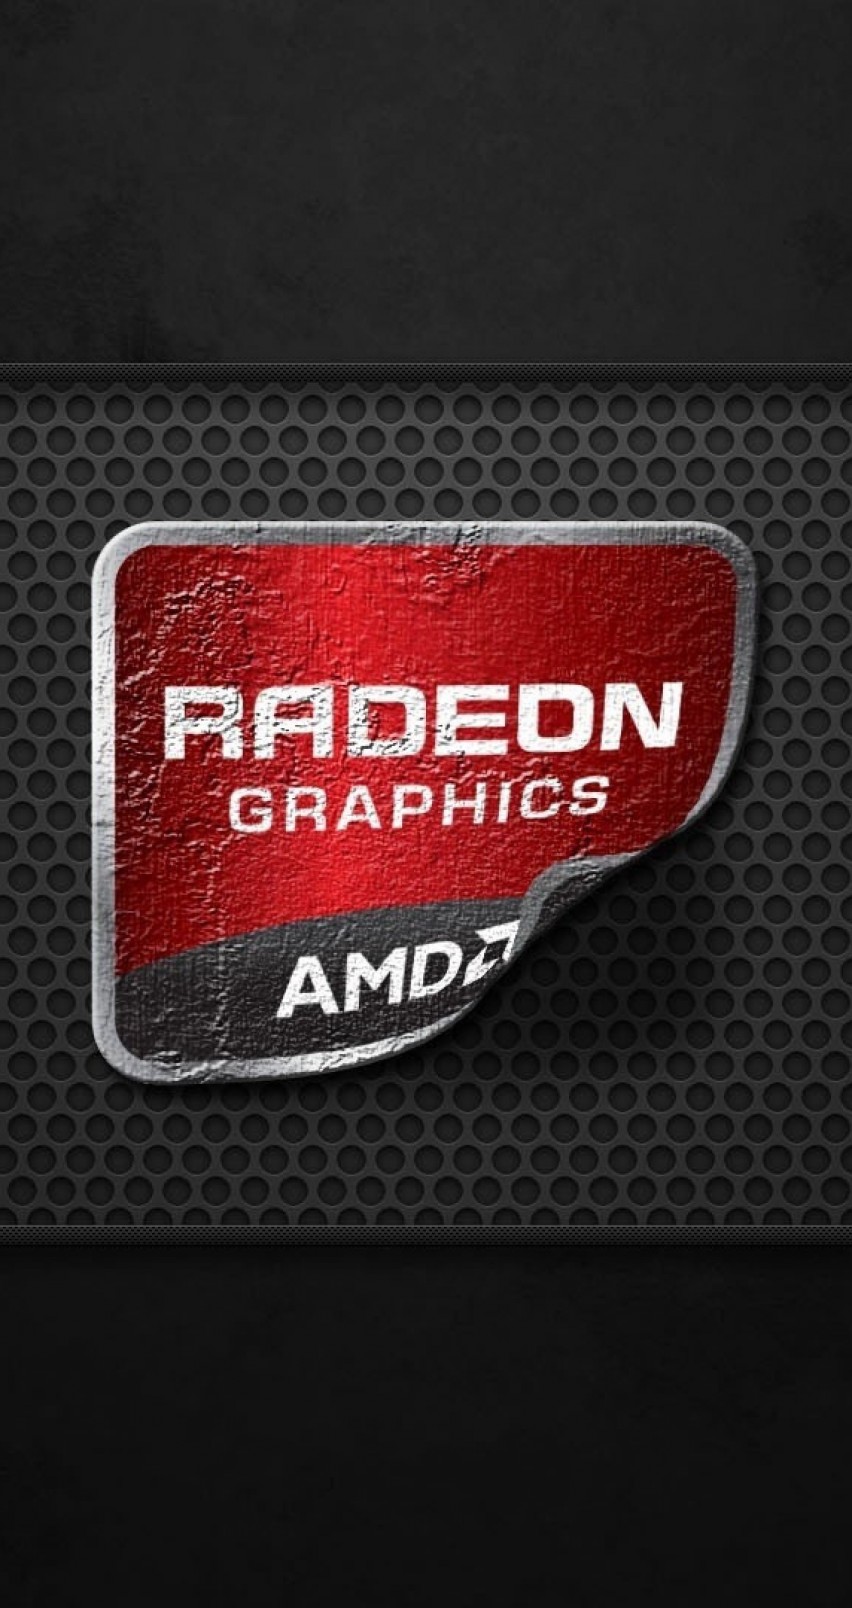 AMD Radeon Graphics Wallpaper for Apple iPhone 6 / 6s